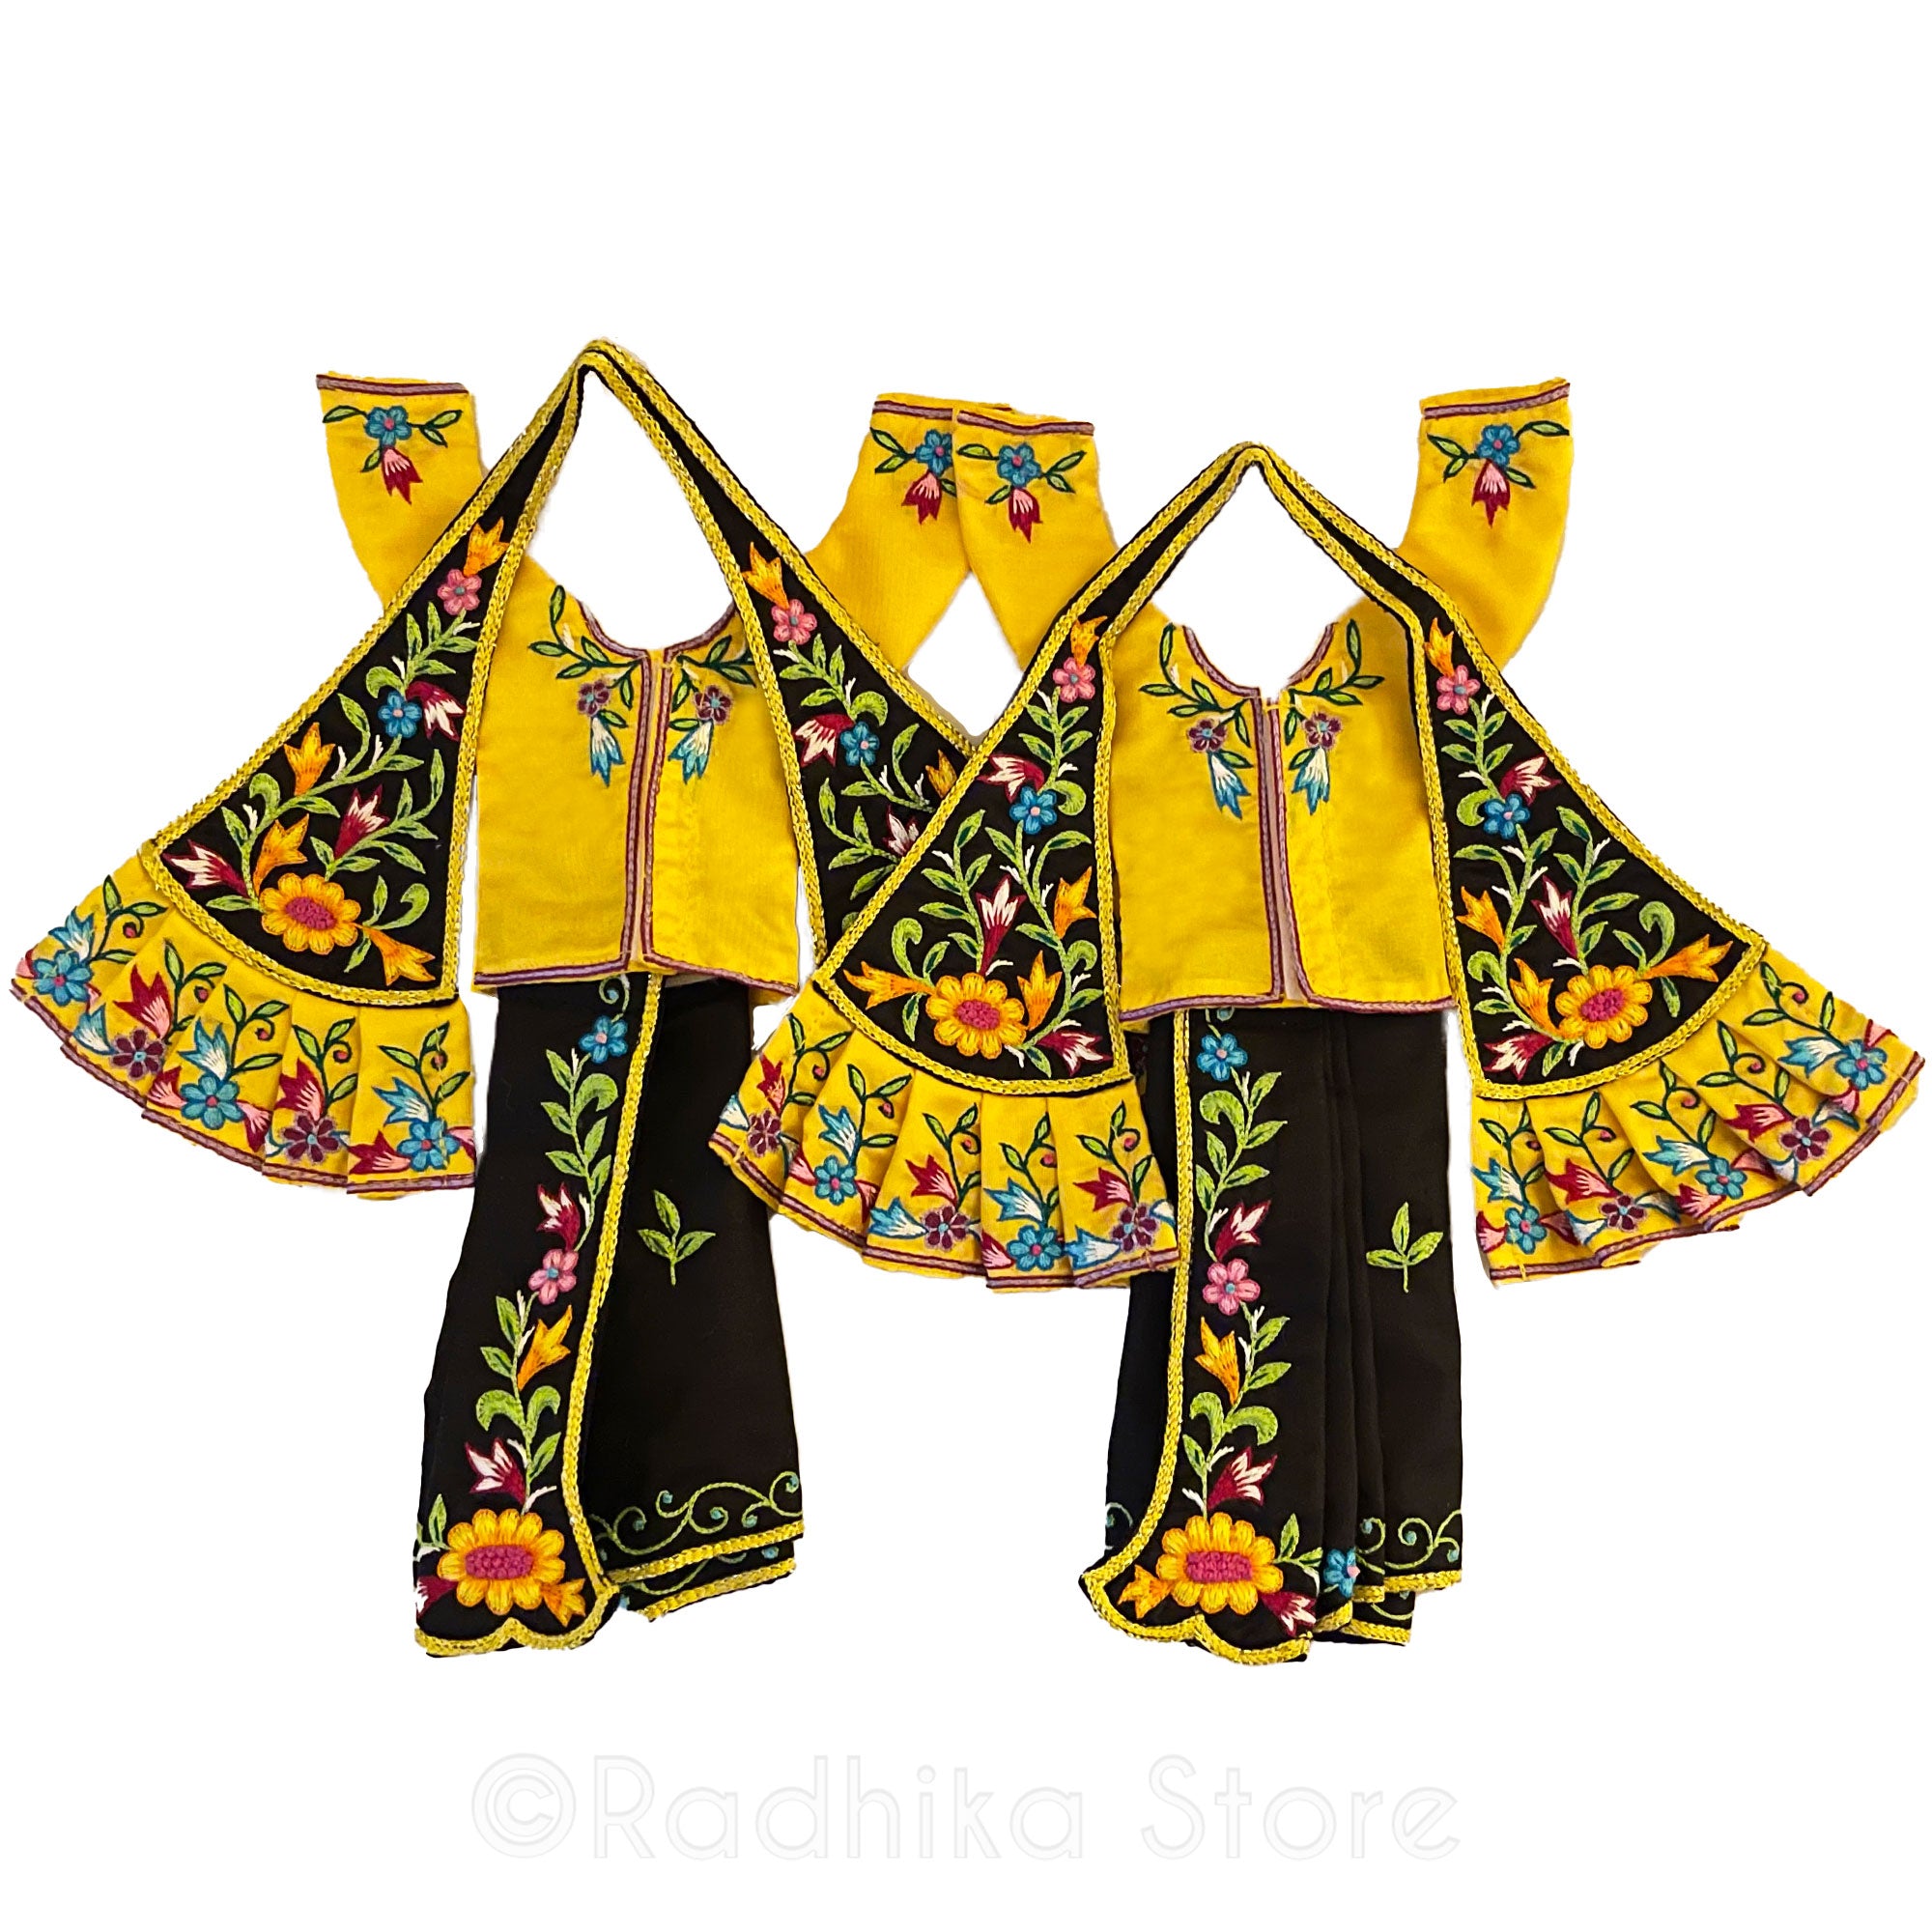 Moon Light Kirtan Dancing - All Silk - Black And Marigold Yellow Multi Color - Gaura Nitai Deity Outfit